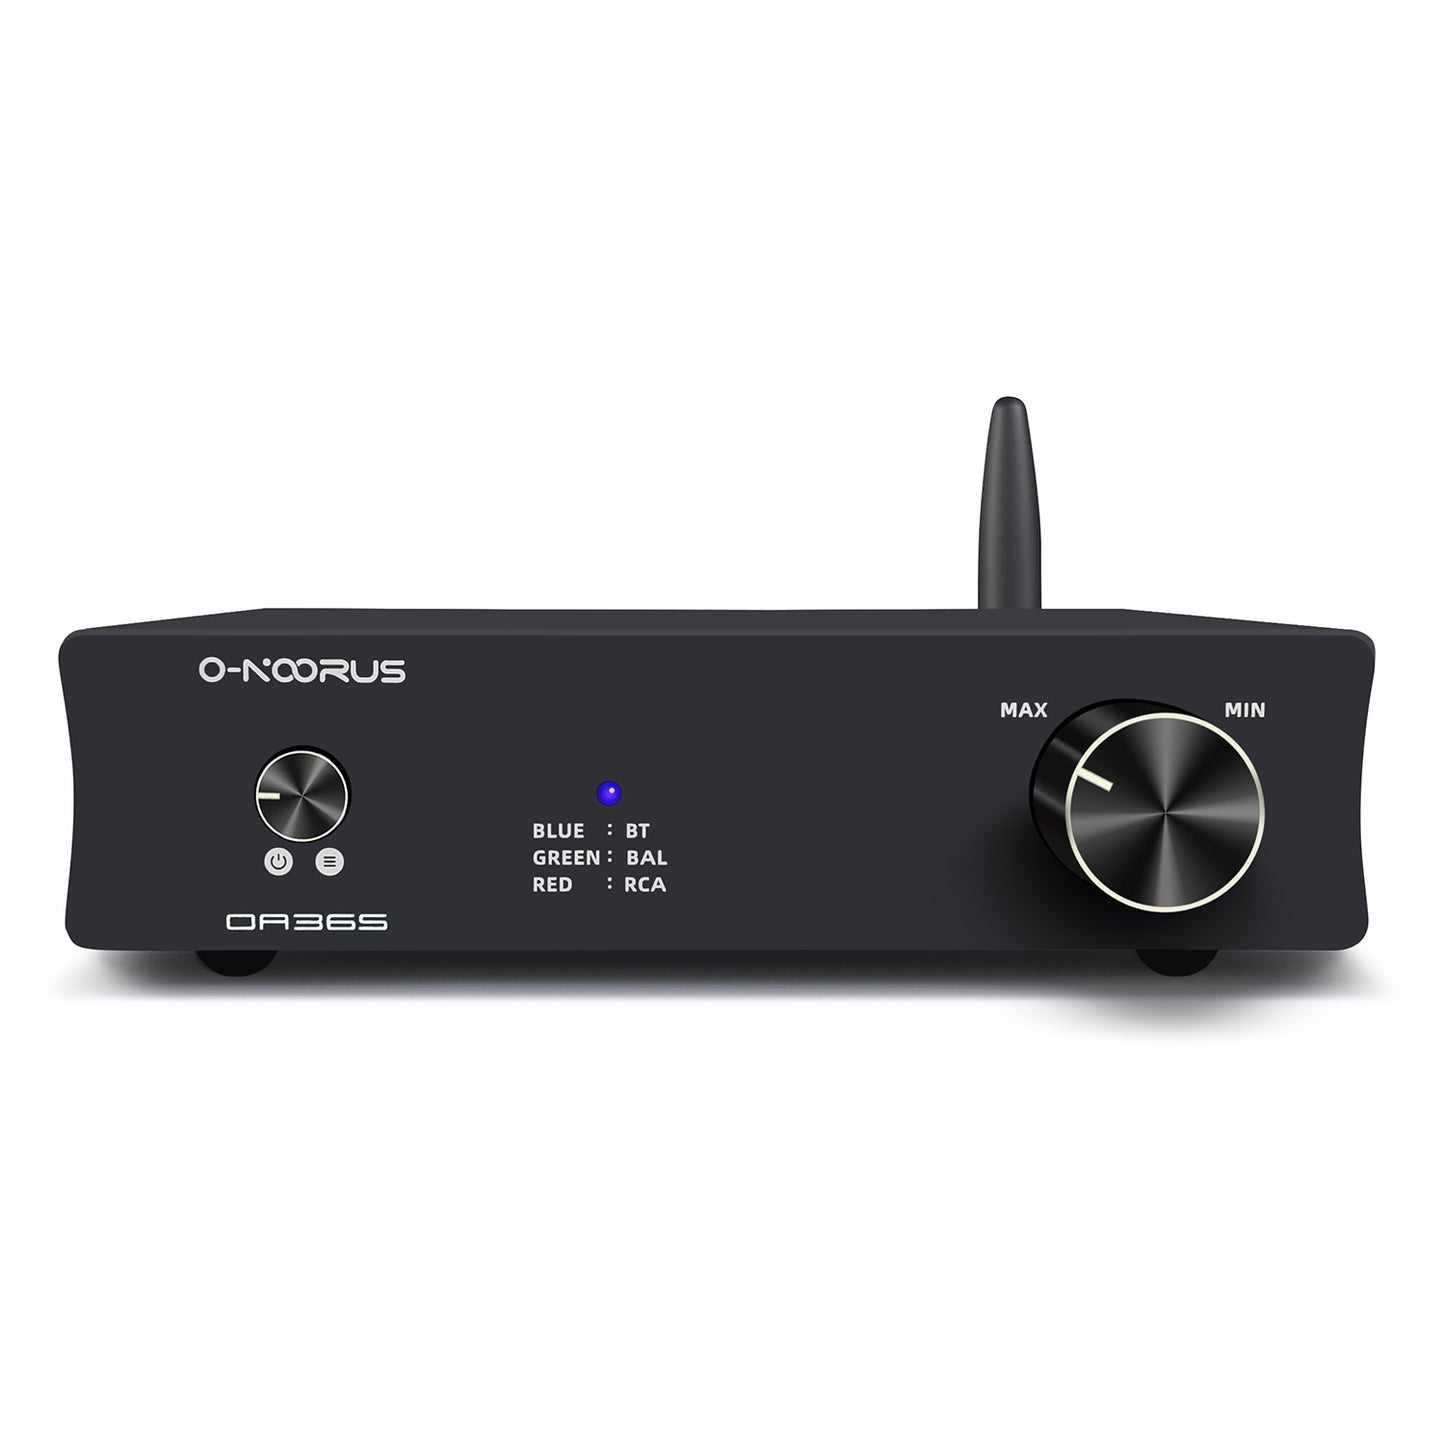 O-NOORUS OA36S Dual MA12070x2 Fully Balanced HIFI Class D Power Amplifier Bluetooth 5.0 Speaker Receiver Aptx RCA TRS Input